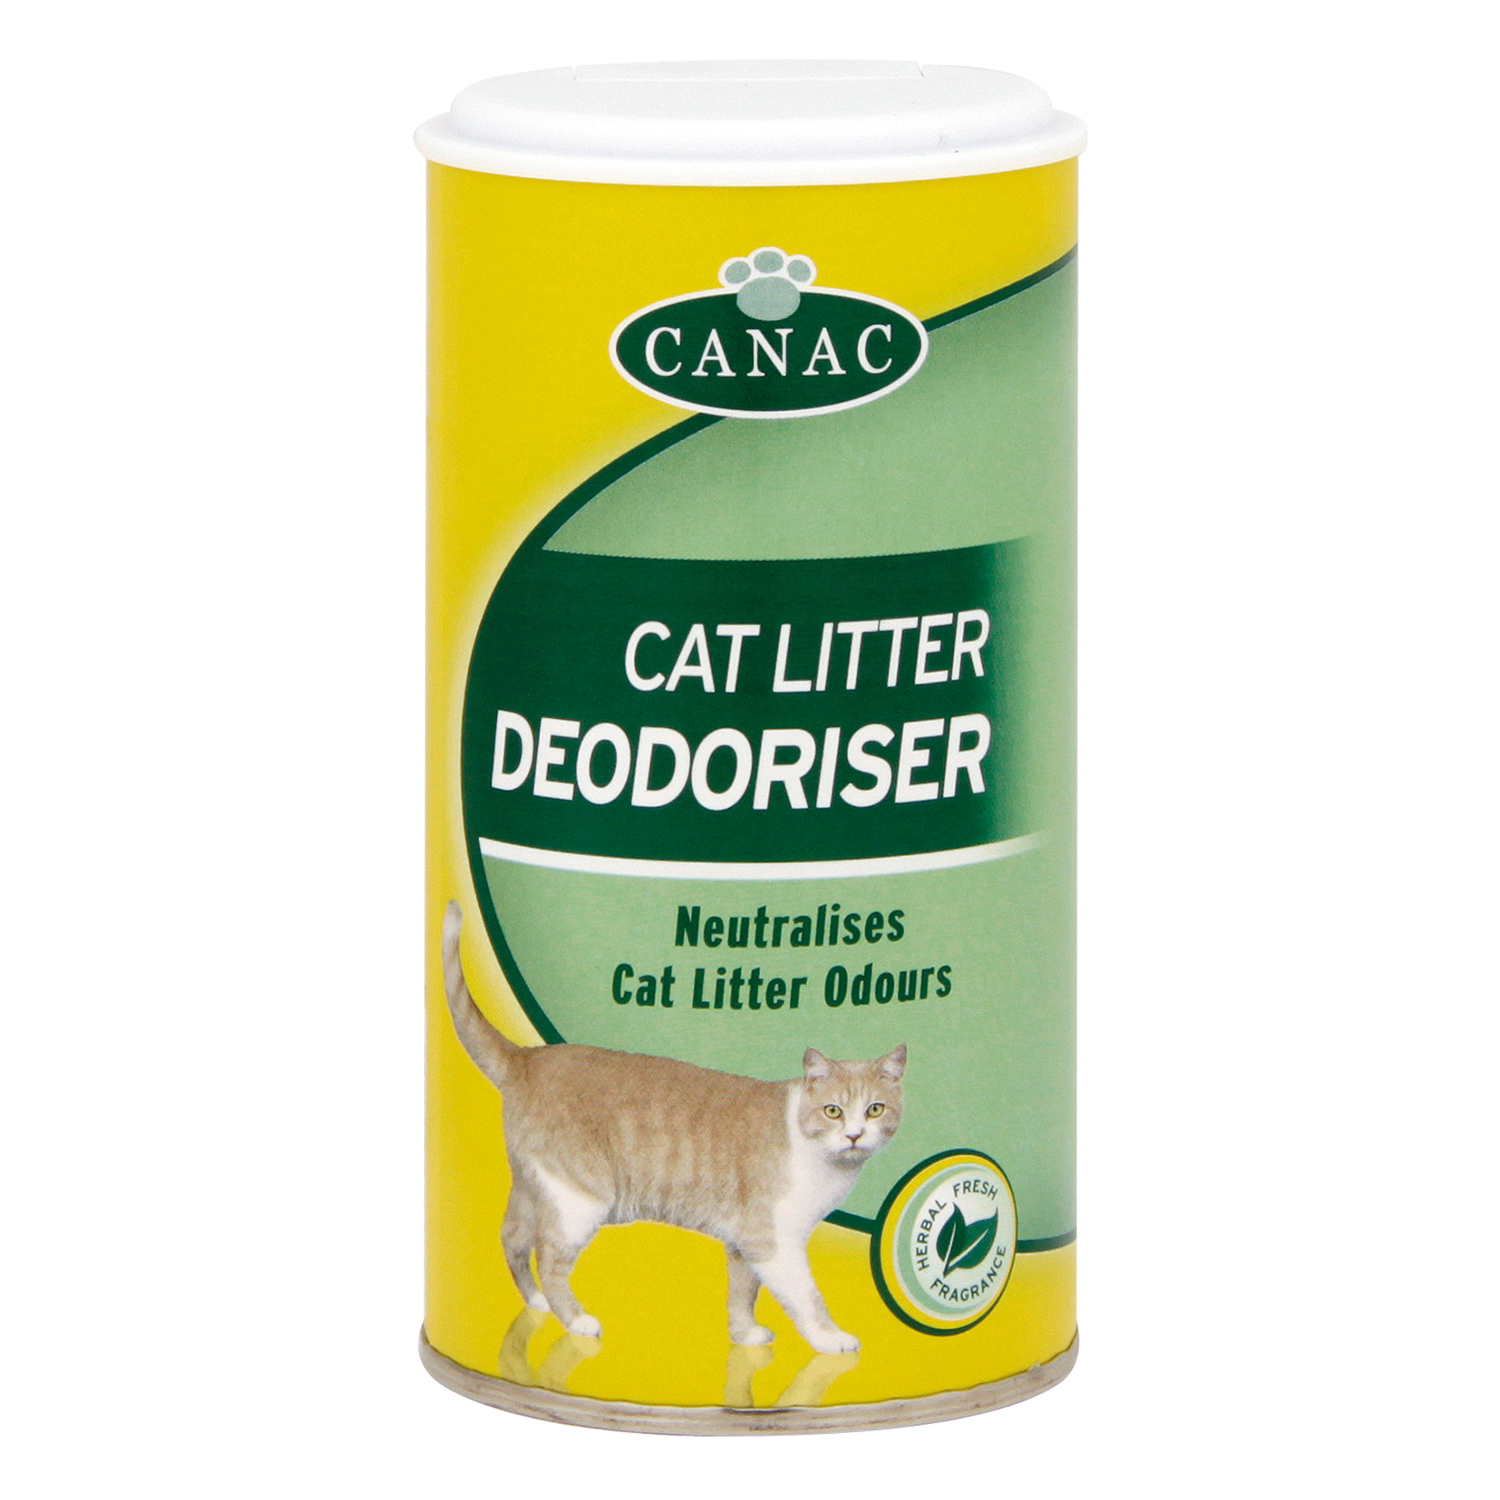 Canac Cat Litter Deodoriser Image